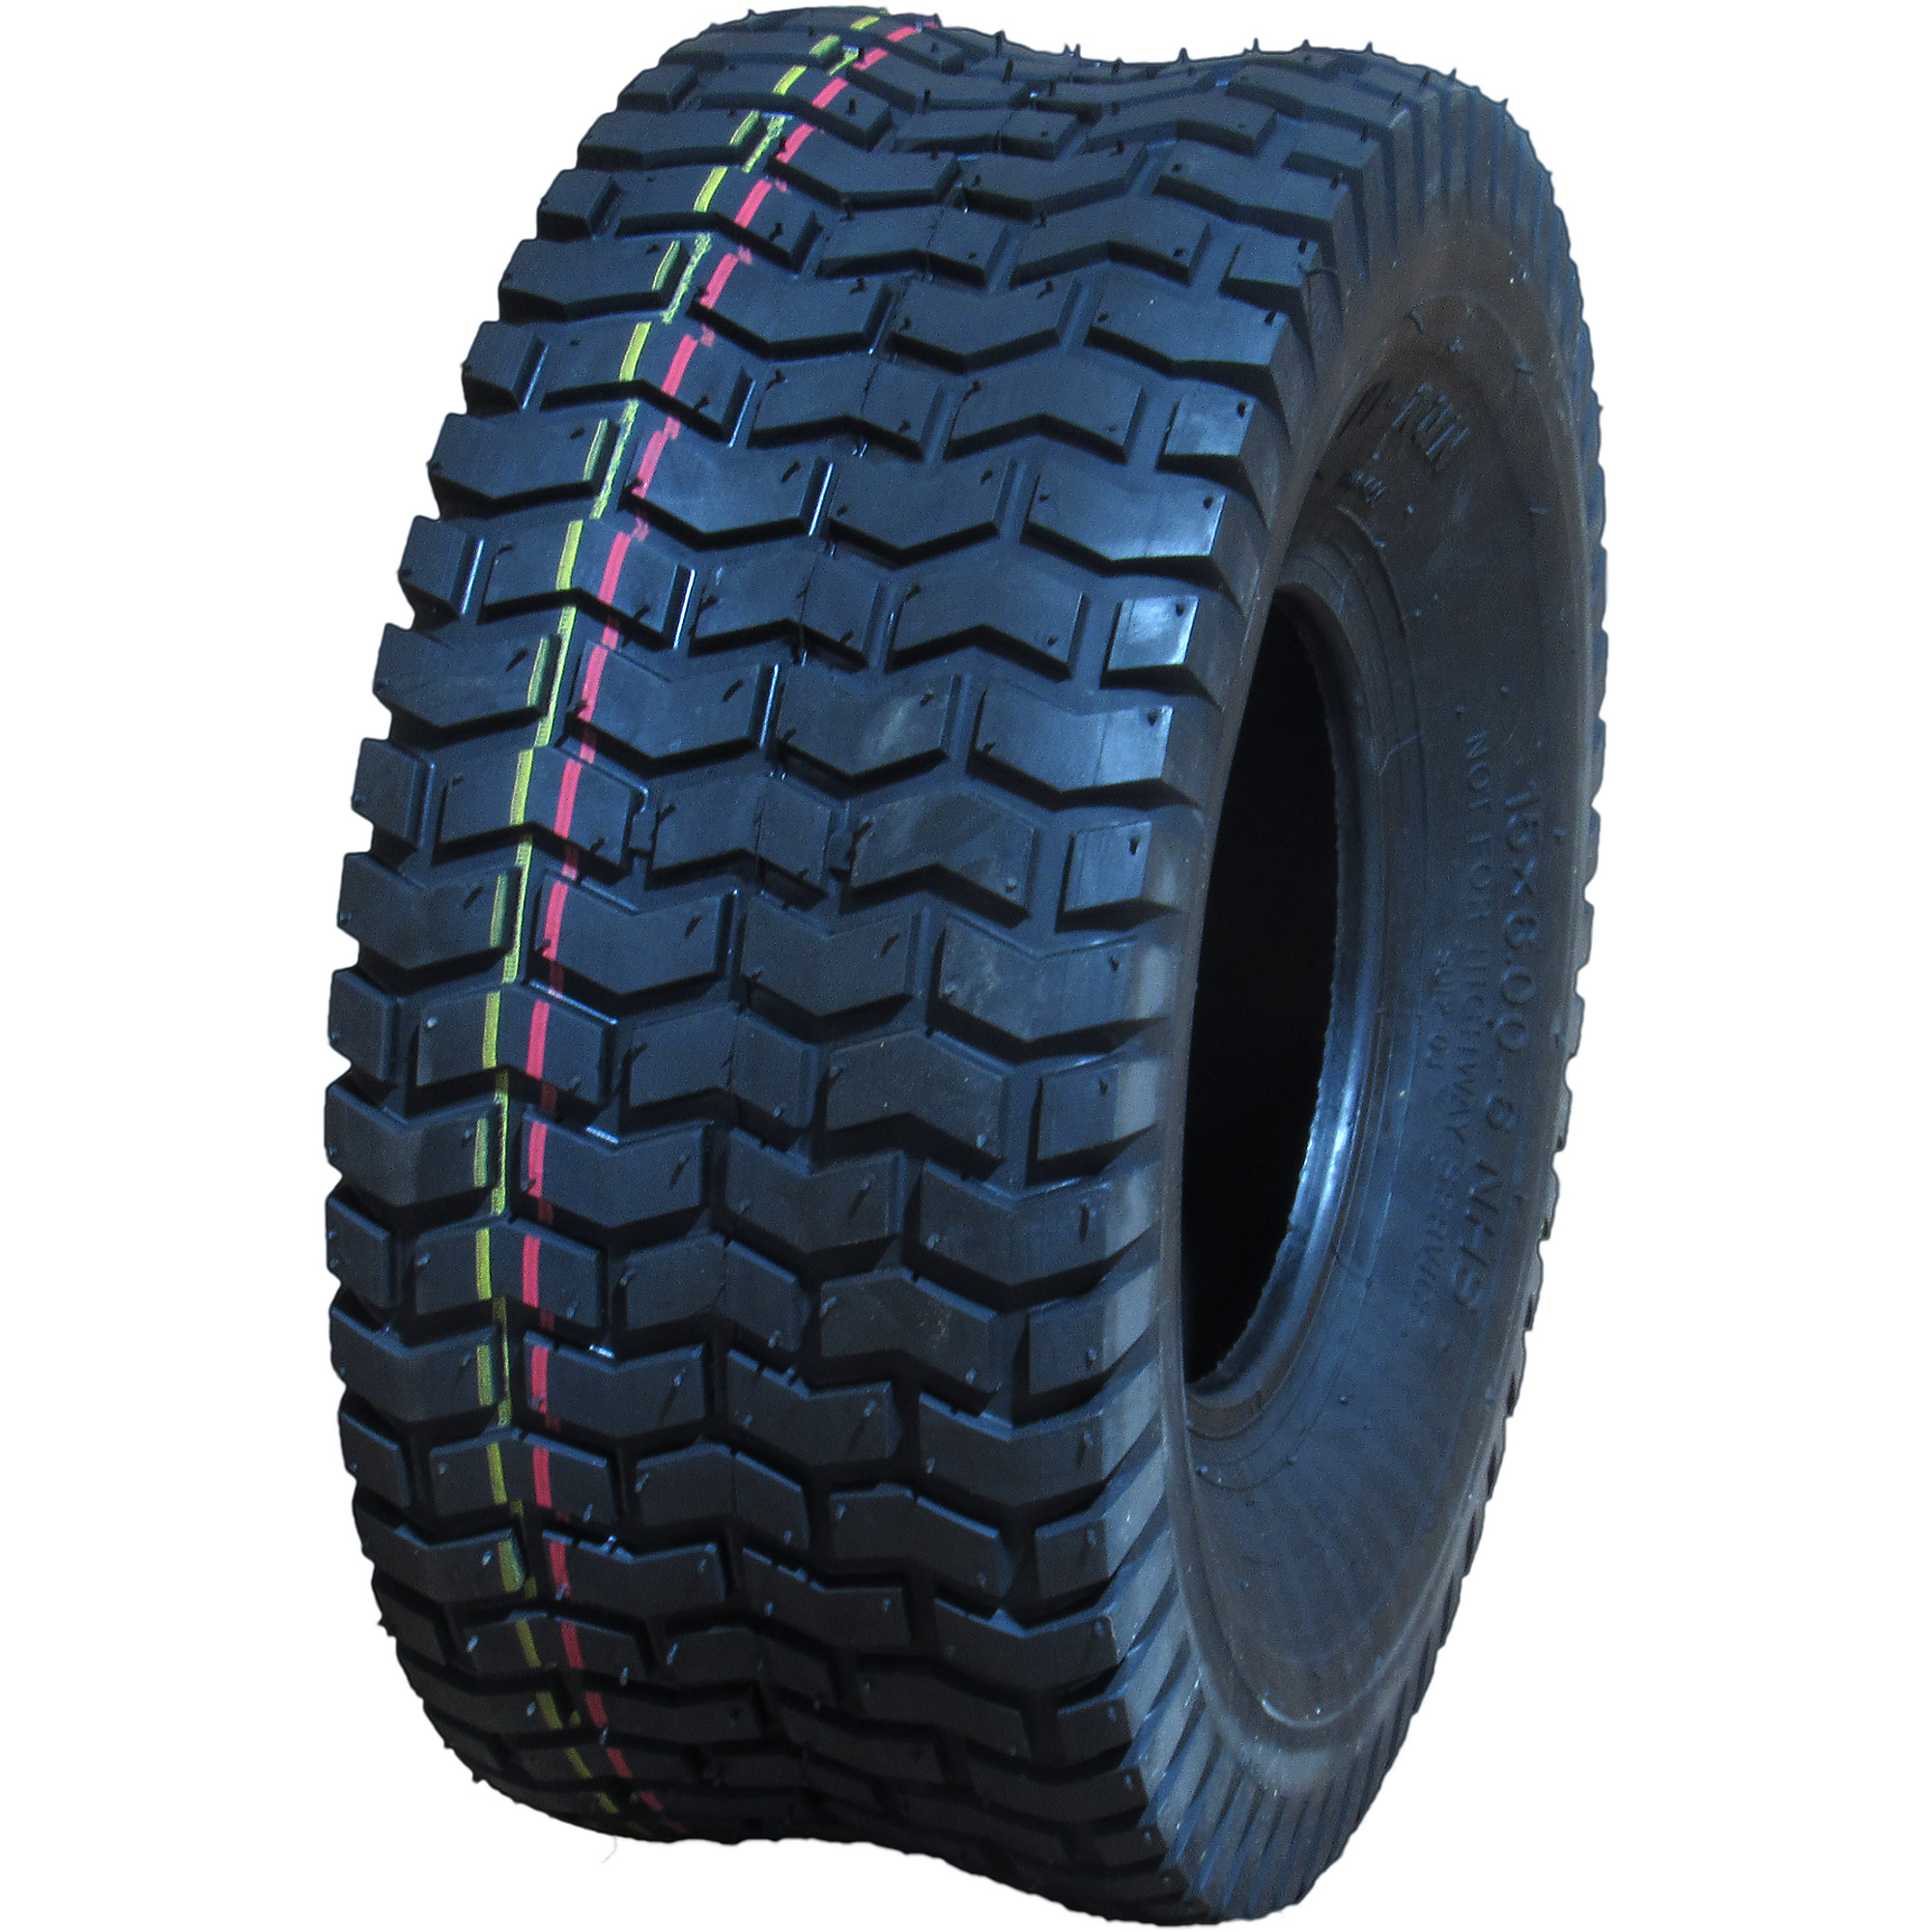 HI-RUN, Lawn Garden Tire, SU12 Turf II, Tire Size 15X6.00-6 Load Range Rating A, Model WD1094